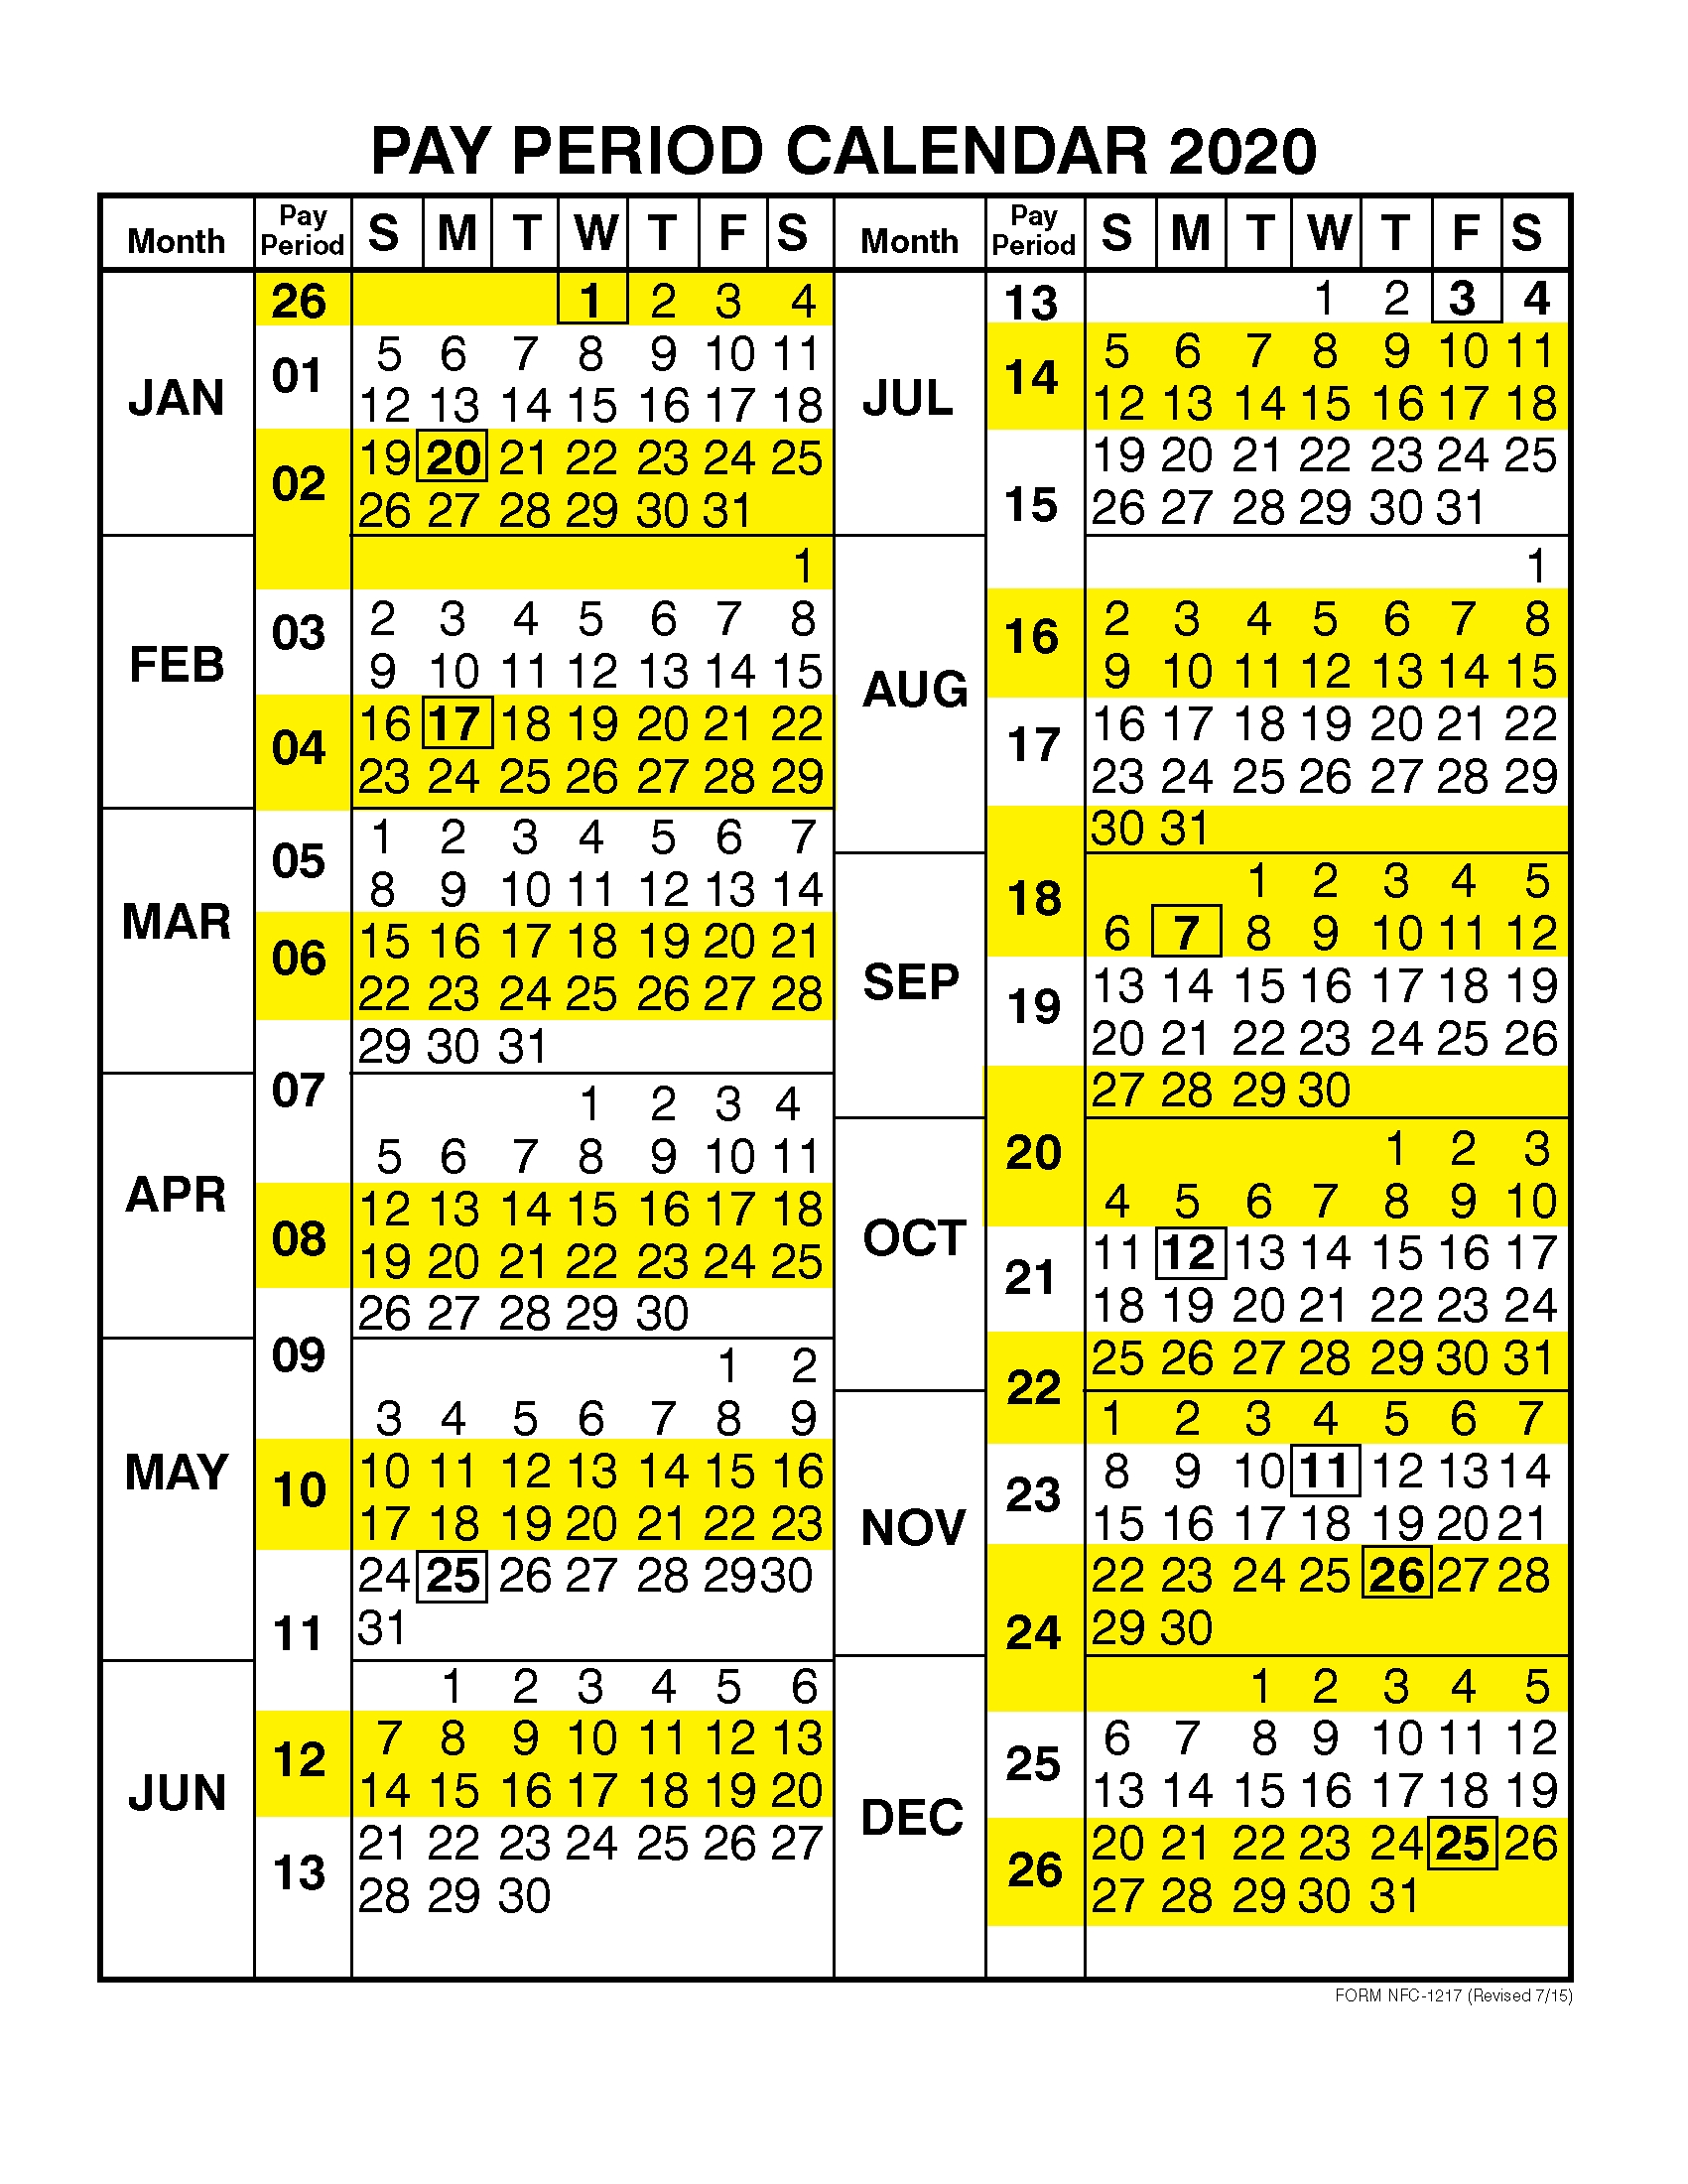 opm-pay-period-calendar-2021-collect-federal-pay-period-calendar-2020